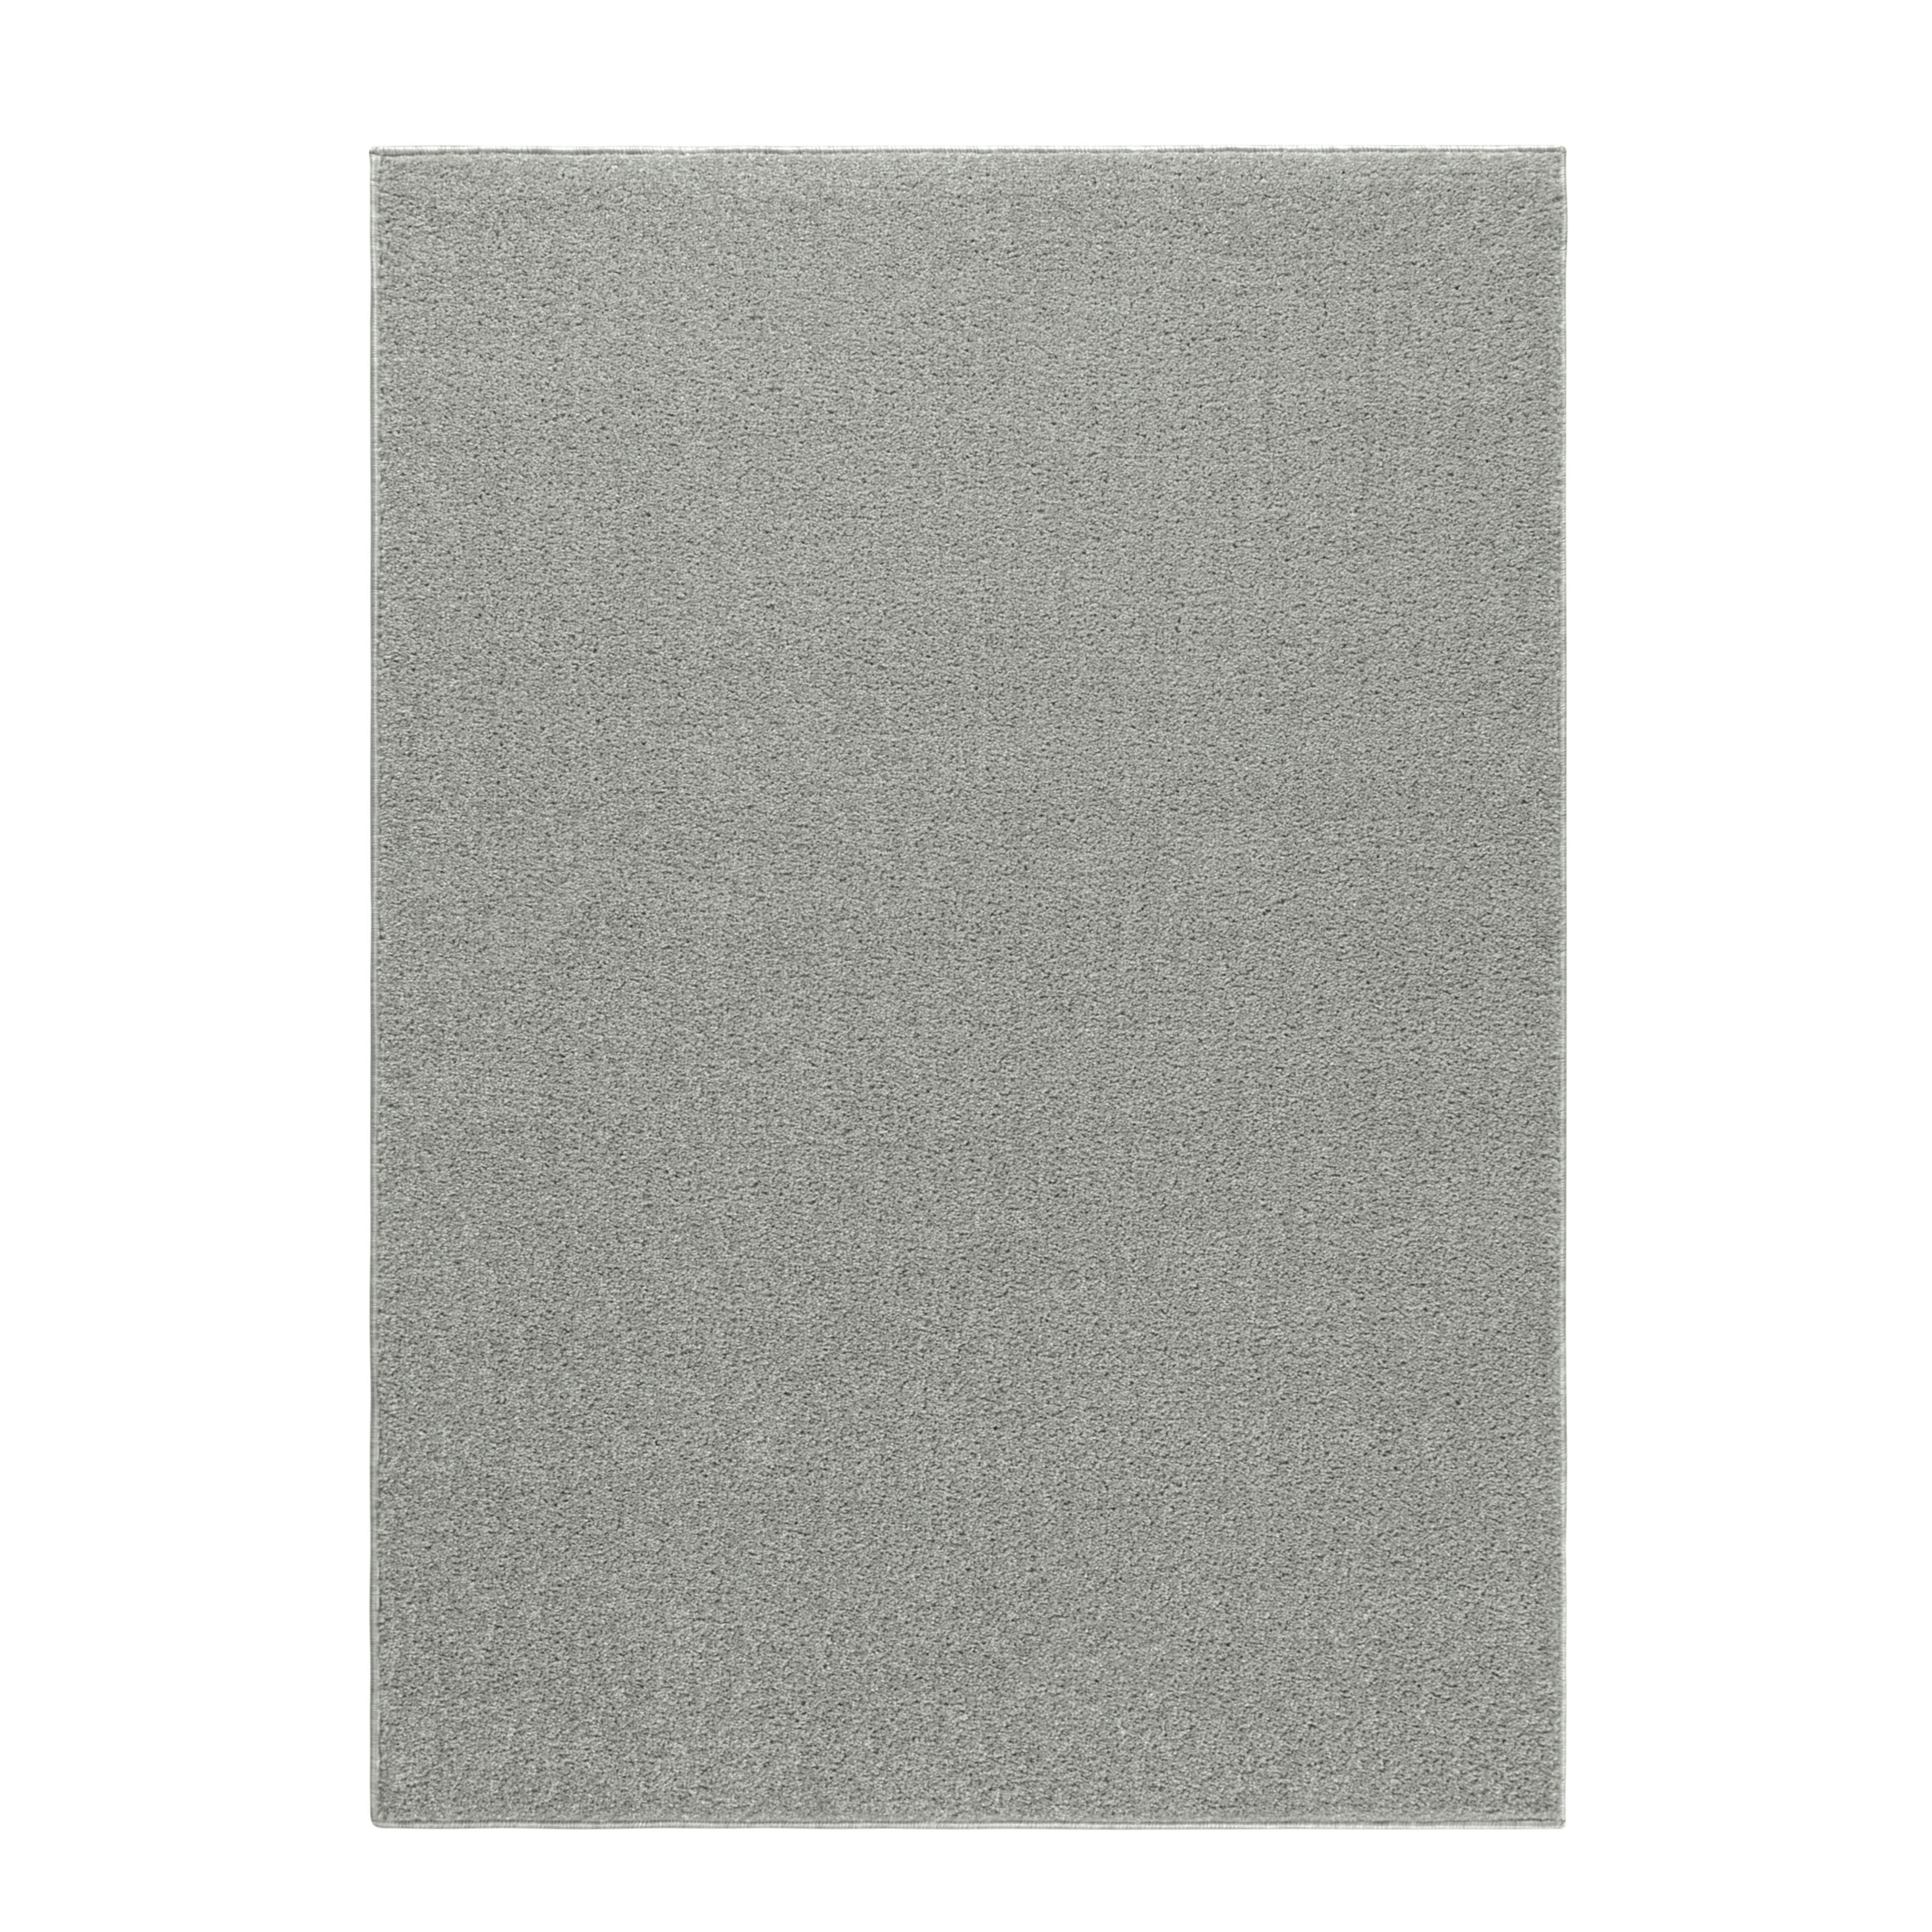 WEBTEPPICH 60/100 cm Ata  - Creme, Basics, Textil (60/100cm) - Novel